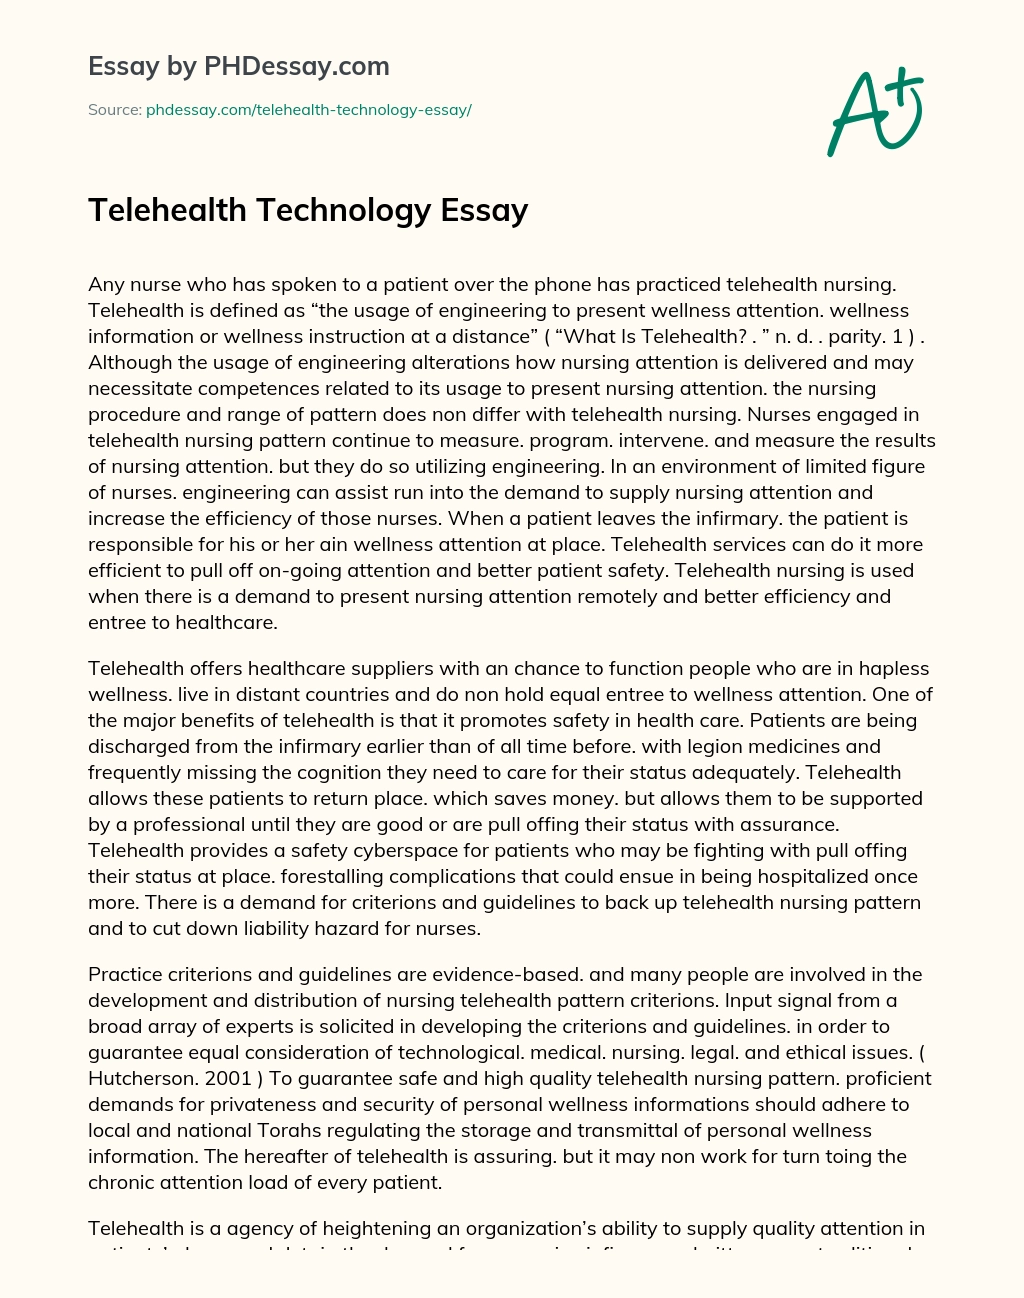 Telehealth Technology Essay essay